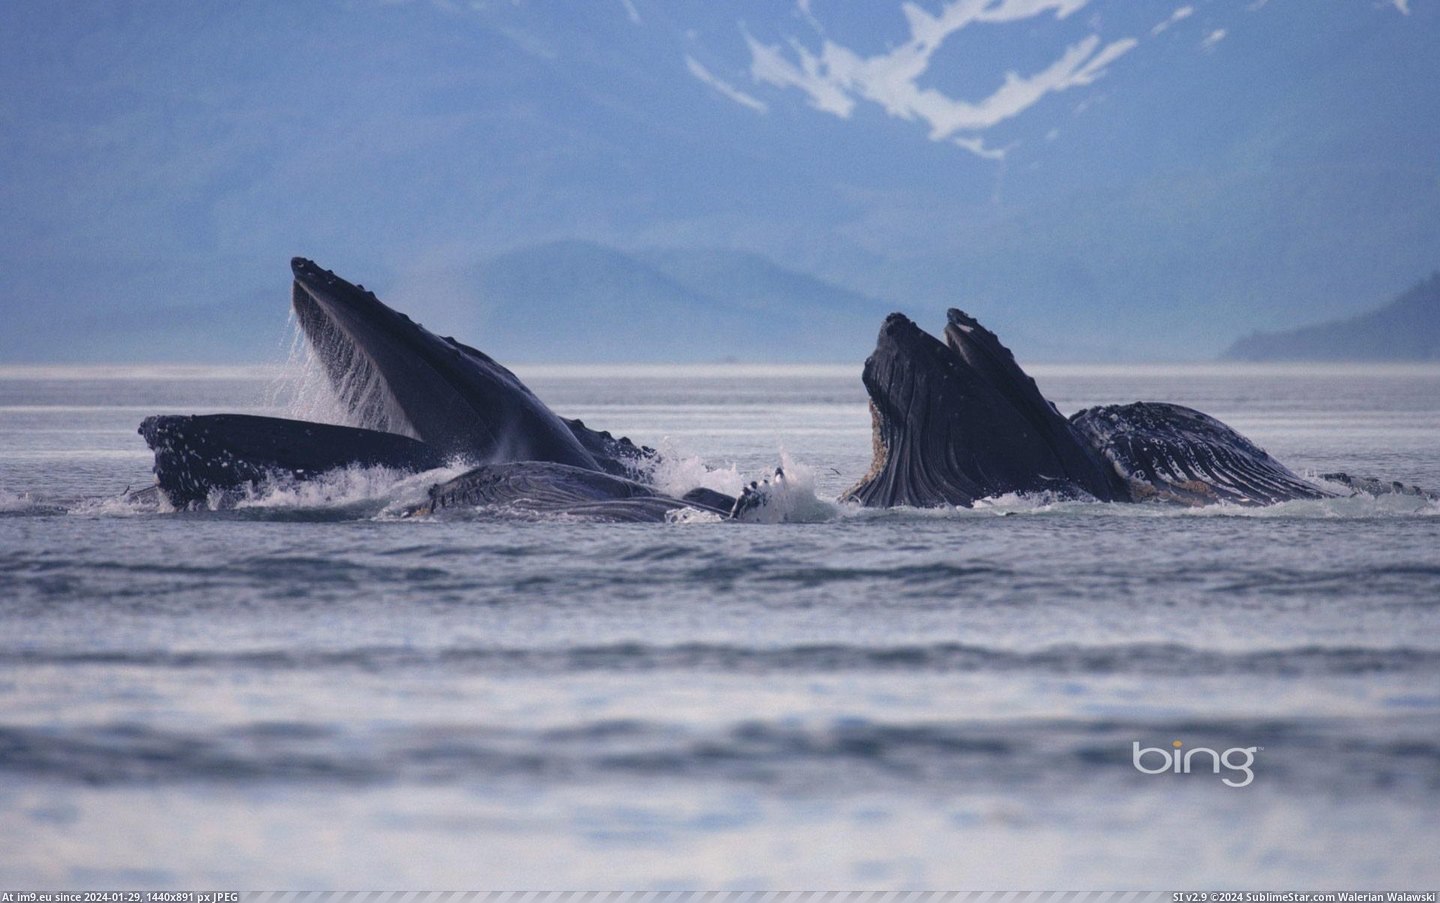 Humpback whales in Lynn Canal, Alaska (in Bing Photos November 2012)